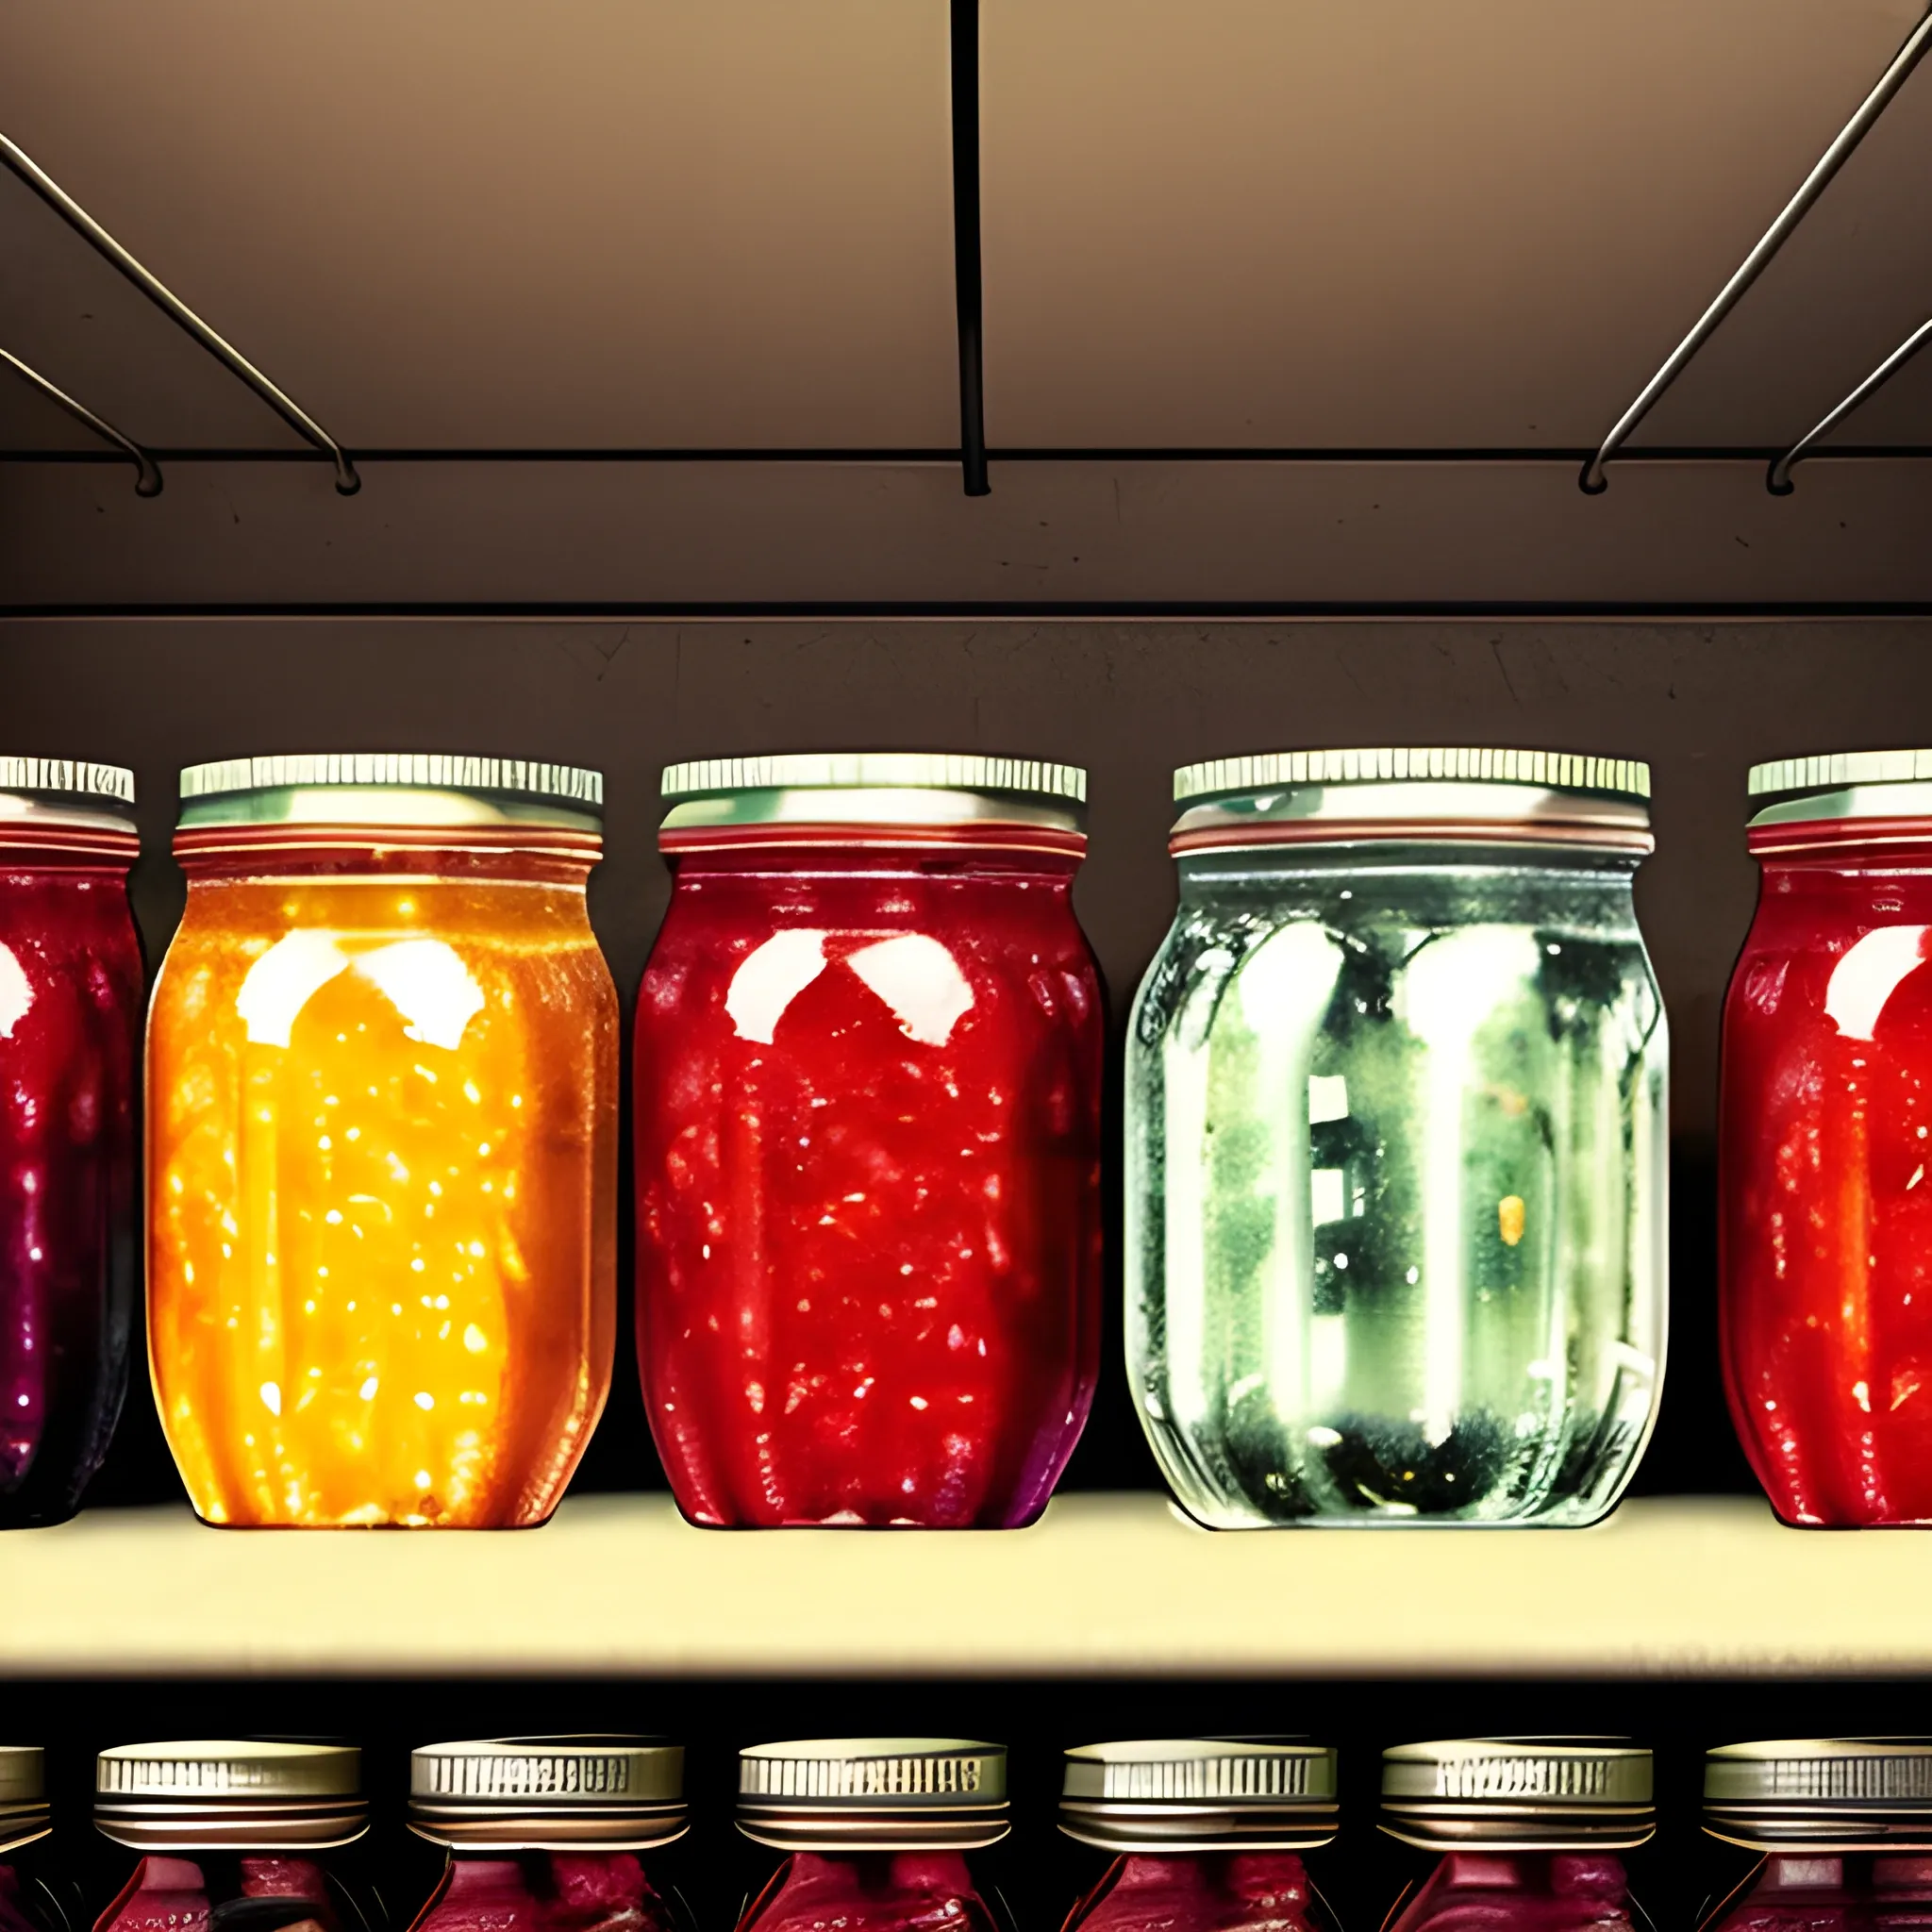 close up view of grocery store shelf with many jam jars, still life, print, nostalgic
